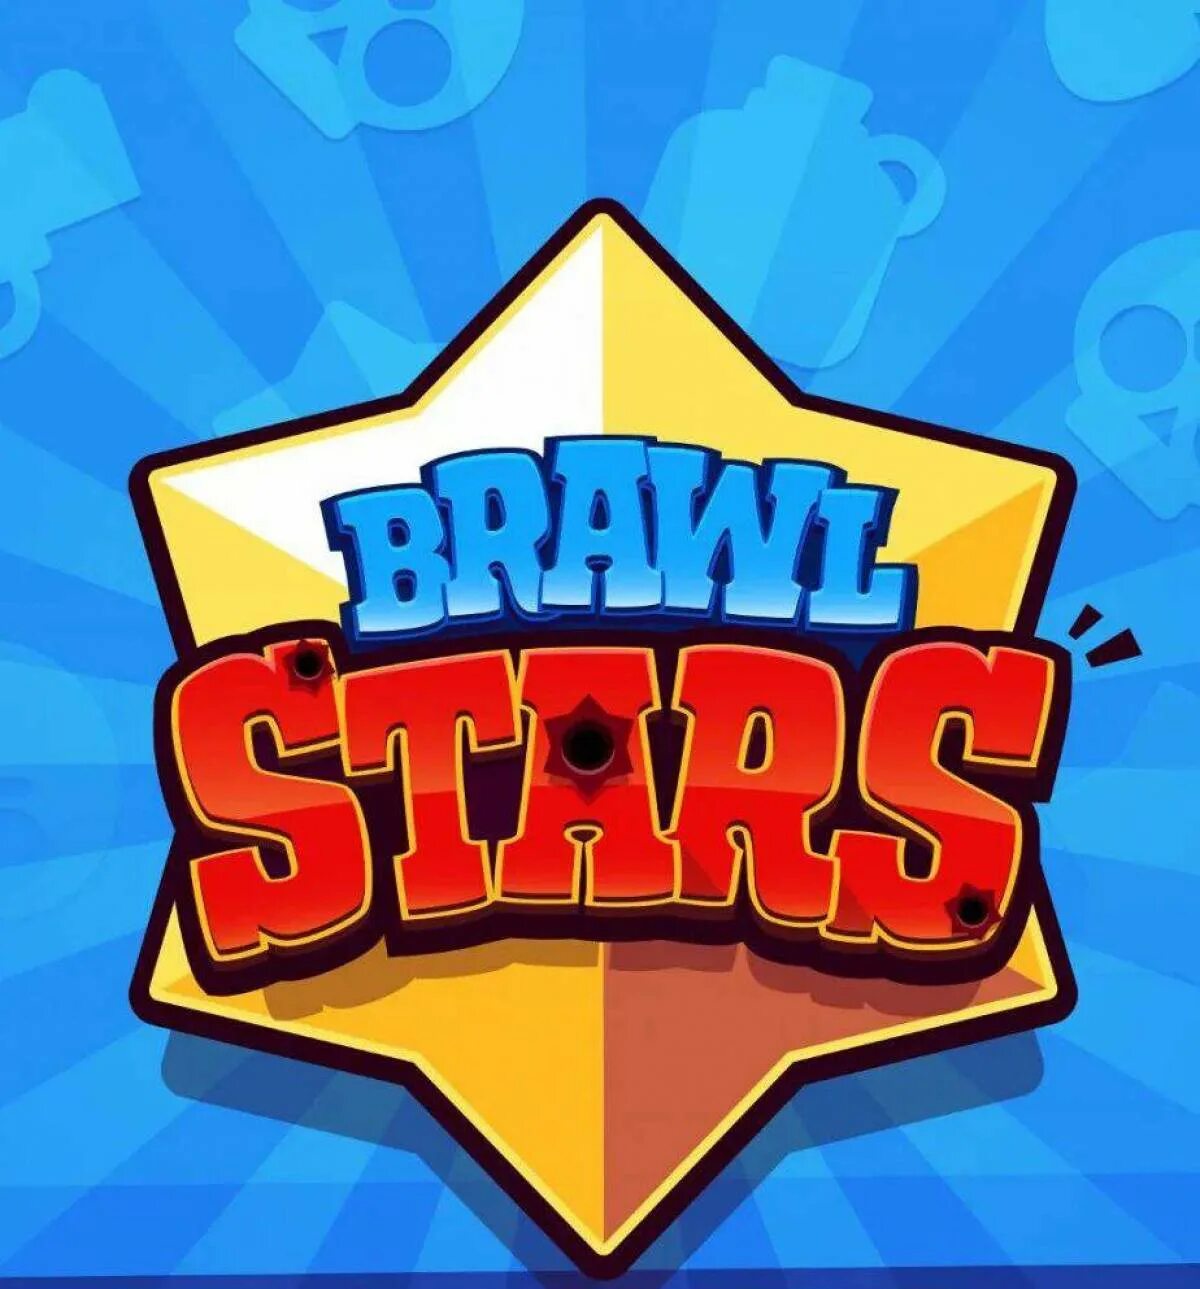 Brawl Stars логотип. Логотип бравлс старс. Старый значок Браво старс. Браво старс надпись. Бравл старс логотип